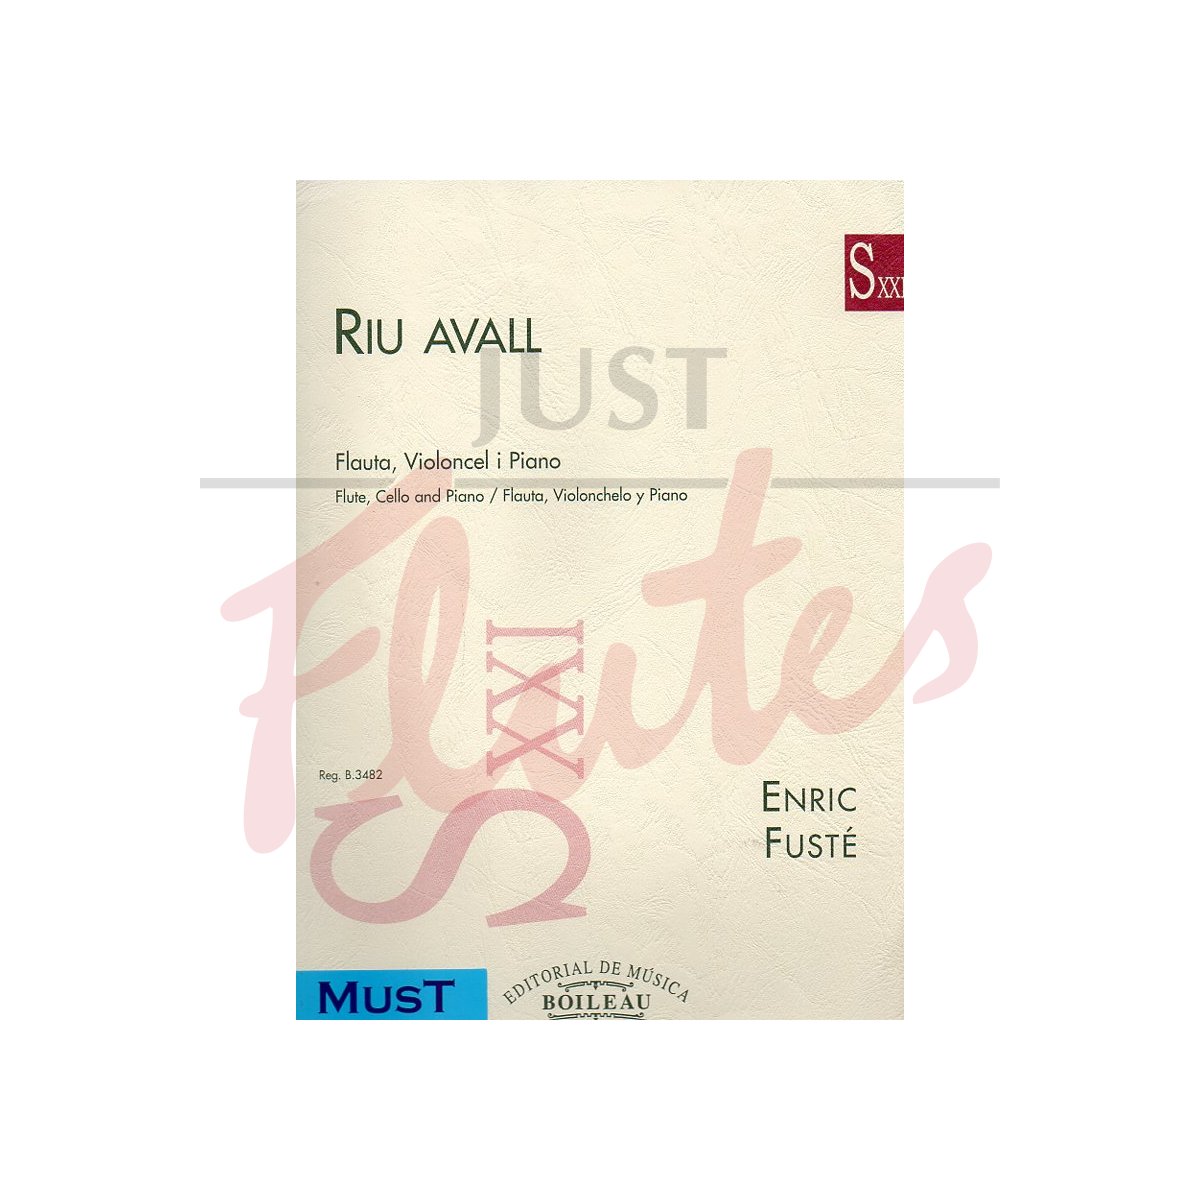 Riu Avall for Flute, Cello and Piano (2003)